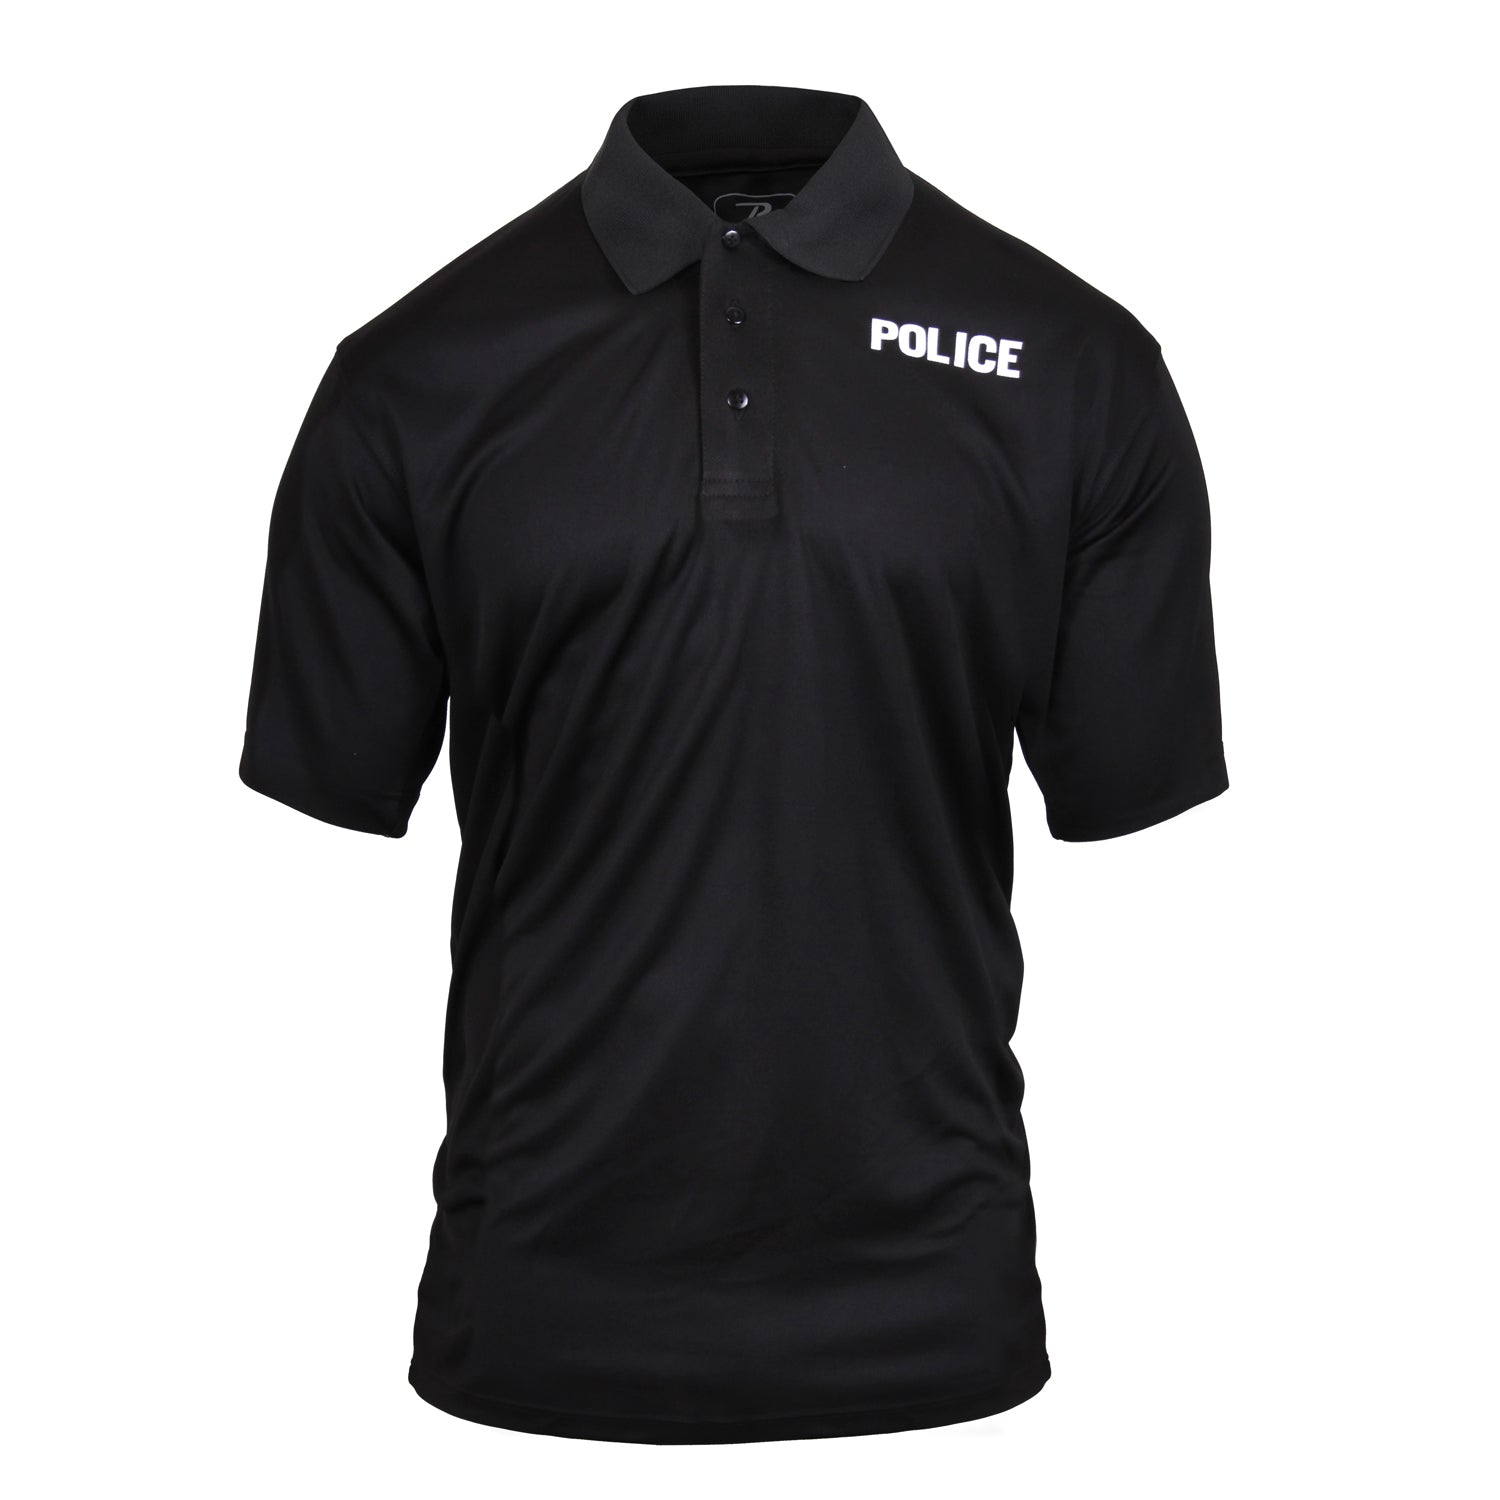 Rothco Moisture Wicking Polo Police T-Shirt Black (3282)